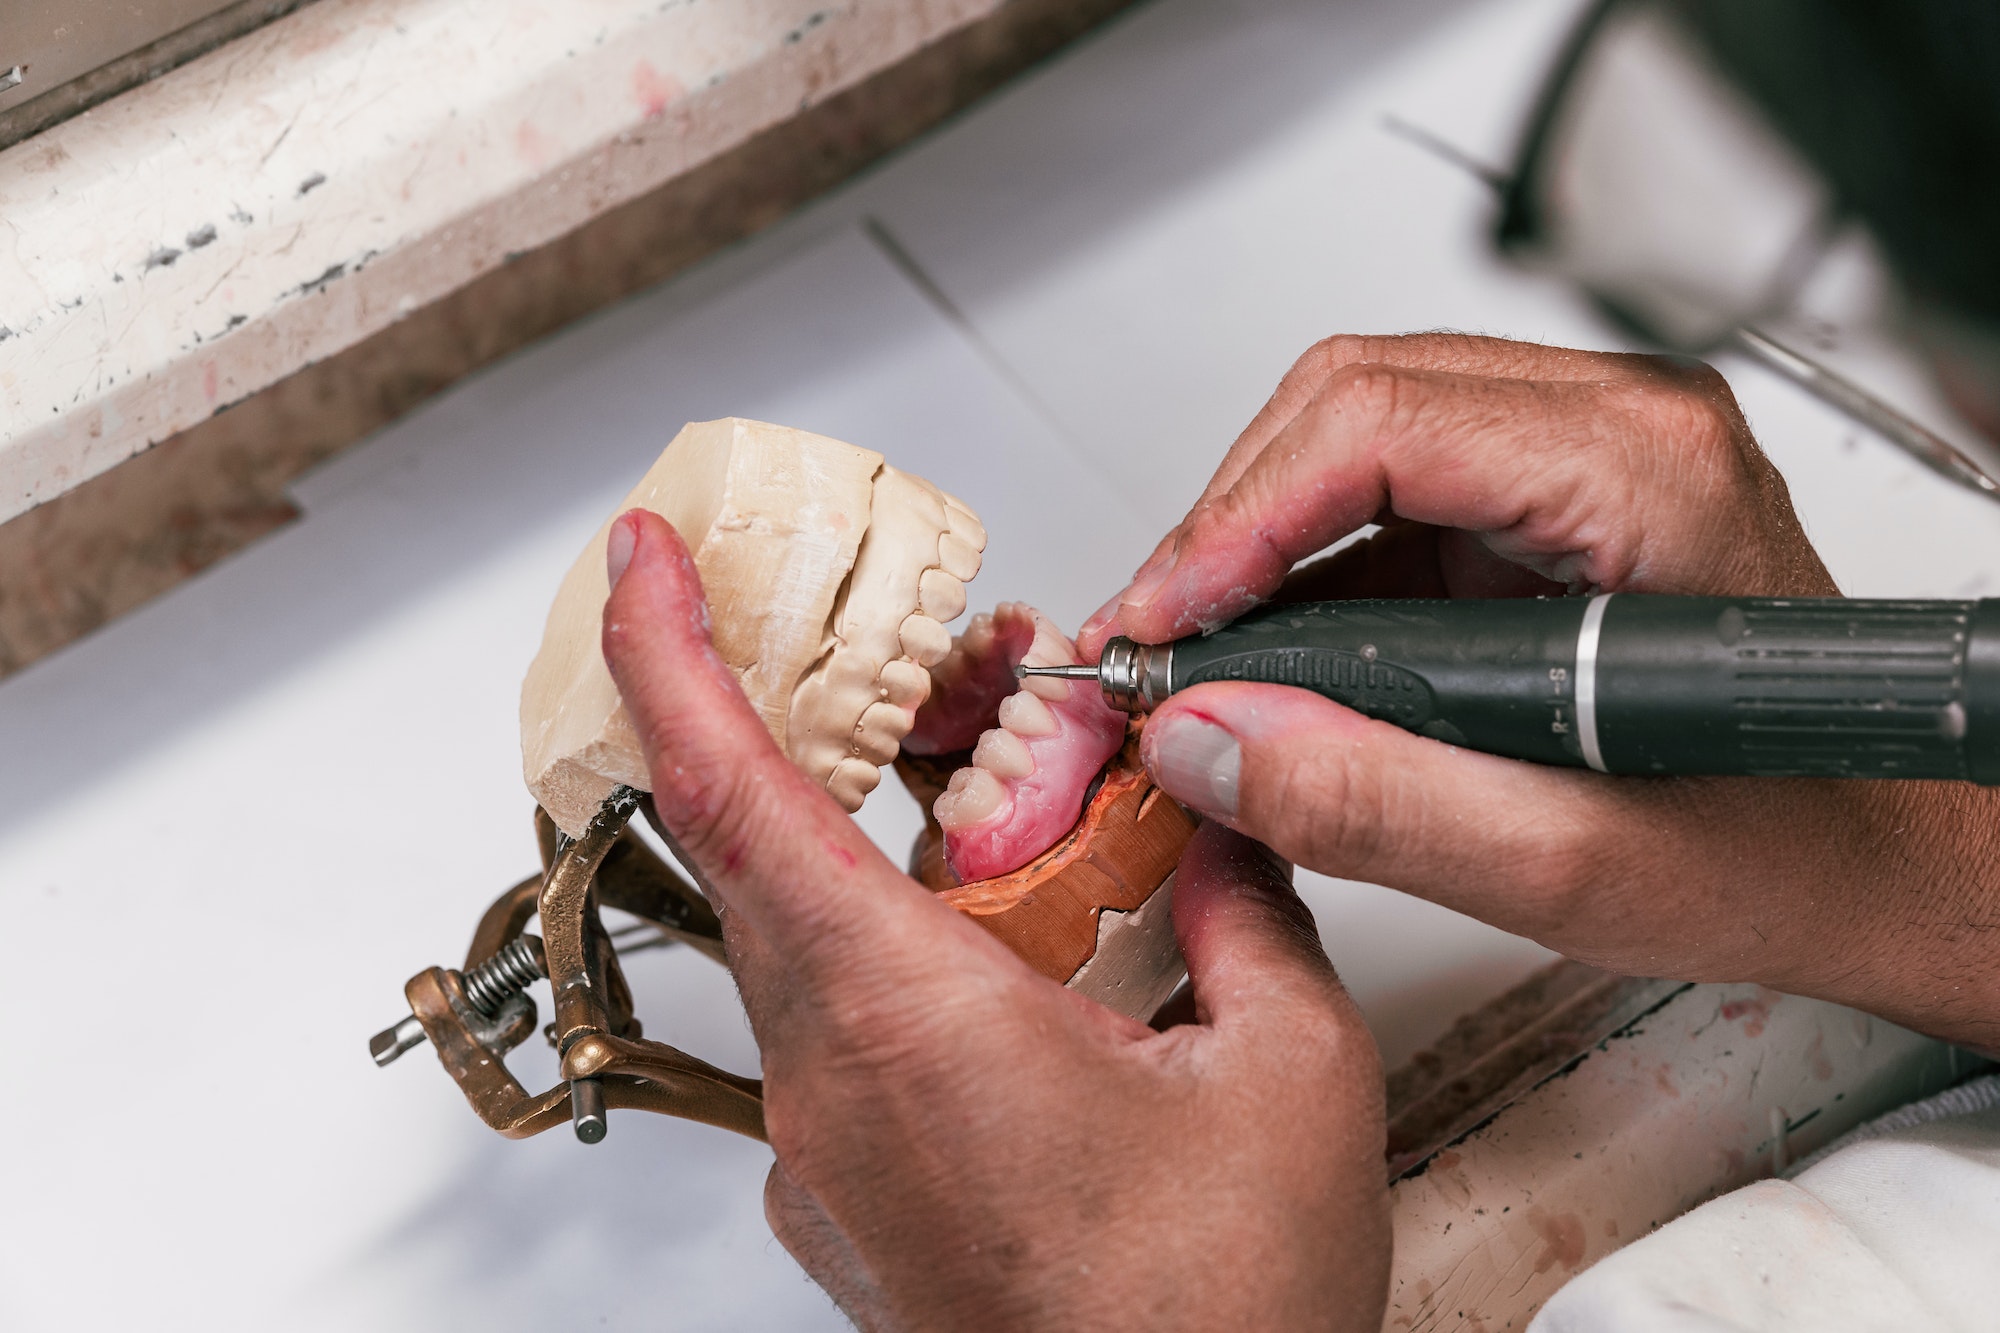 Hands of a dental technician filing a dental implant